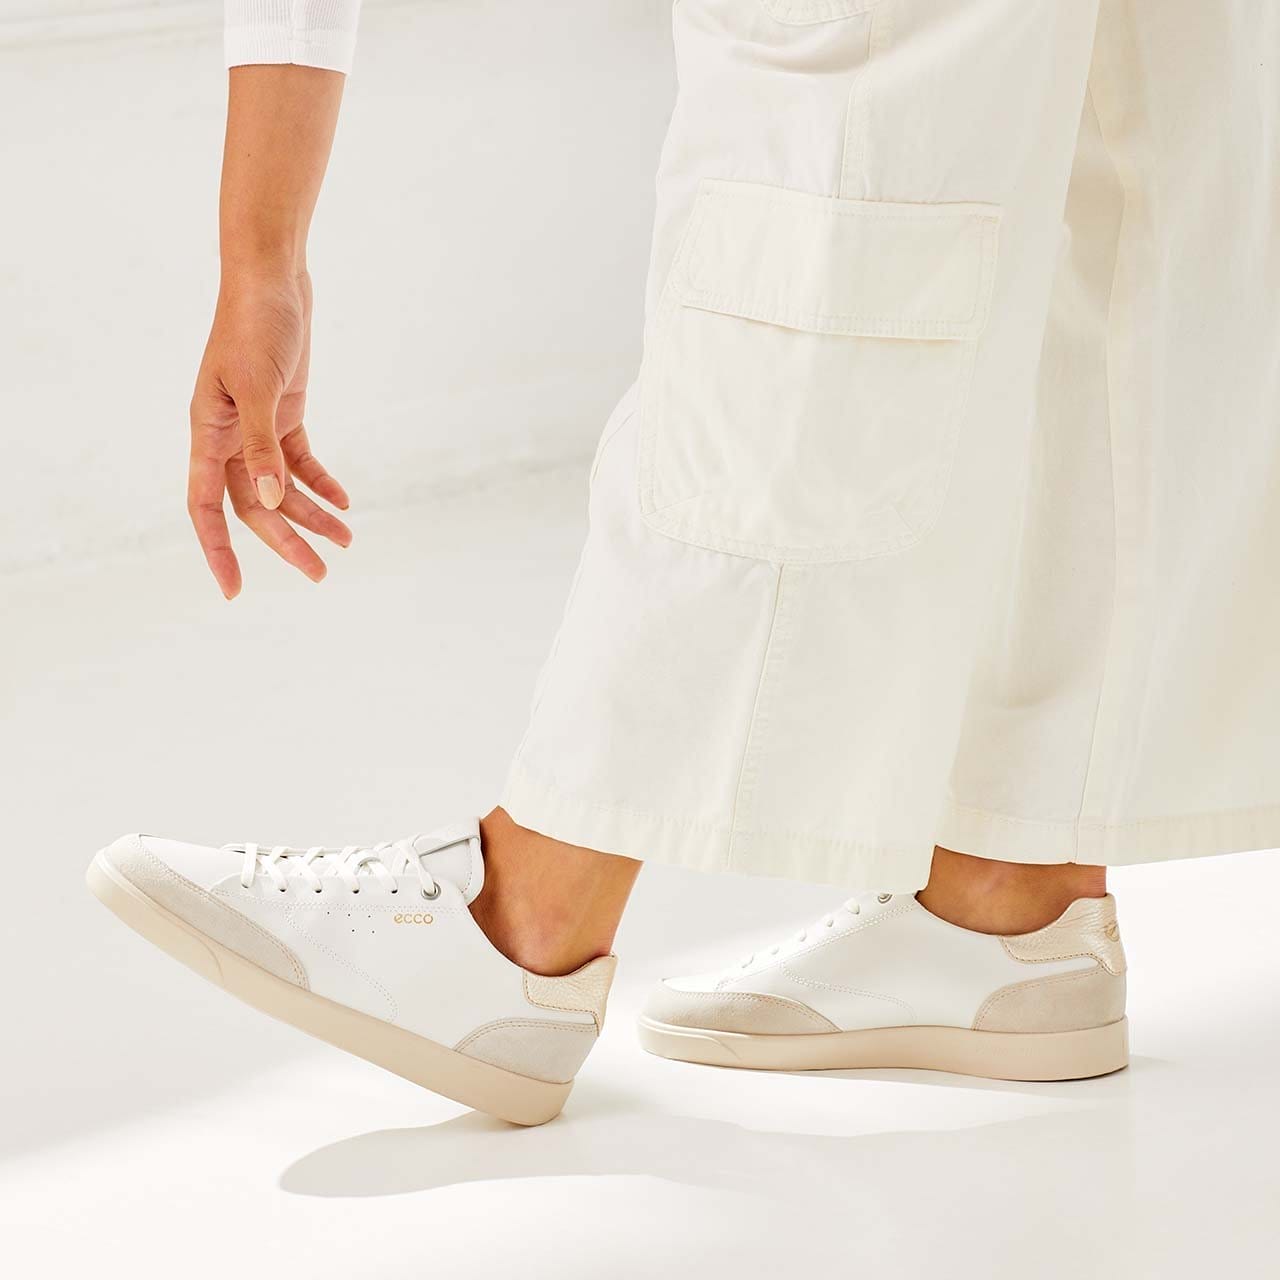 Woman wearing white sneakers